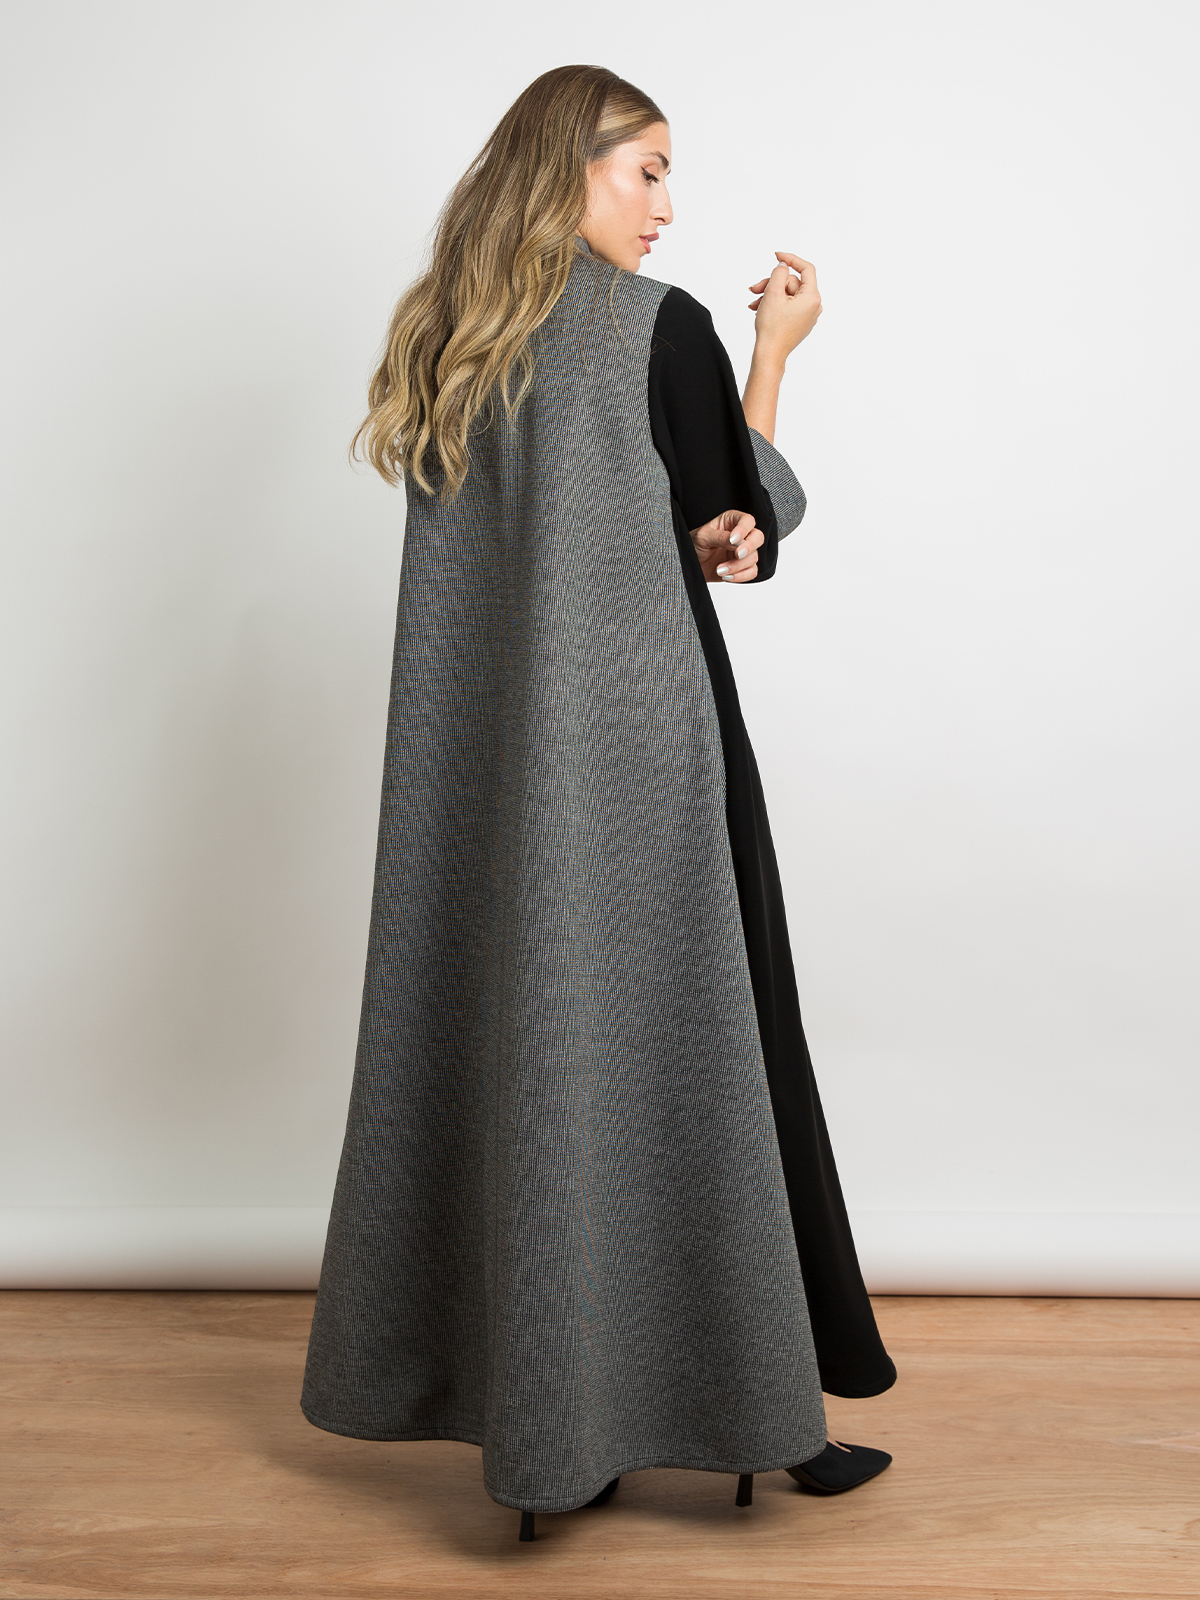 Black with Gray - A Cut Long Open Half Cloche Abaya in Warm Soft Fabric